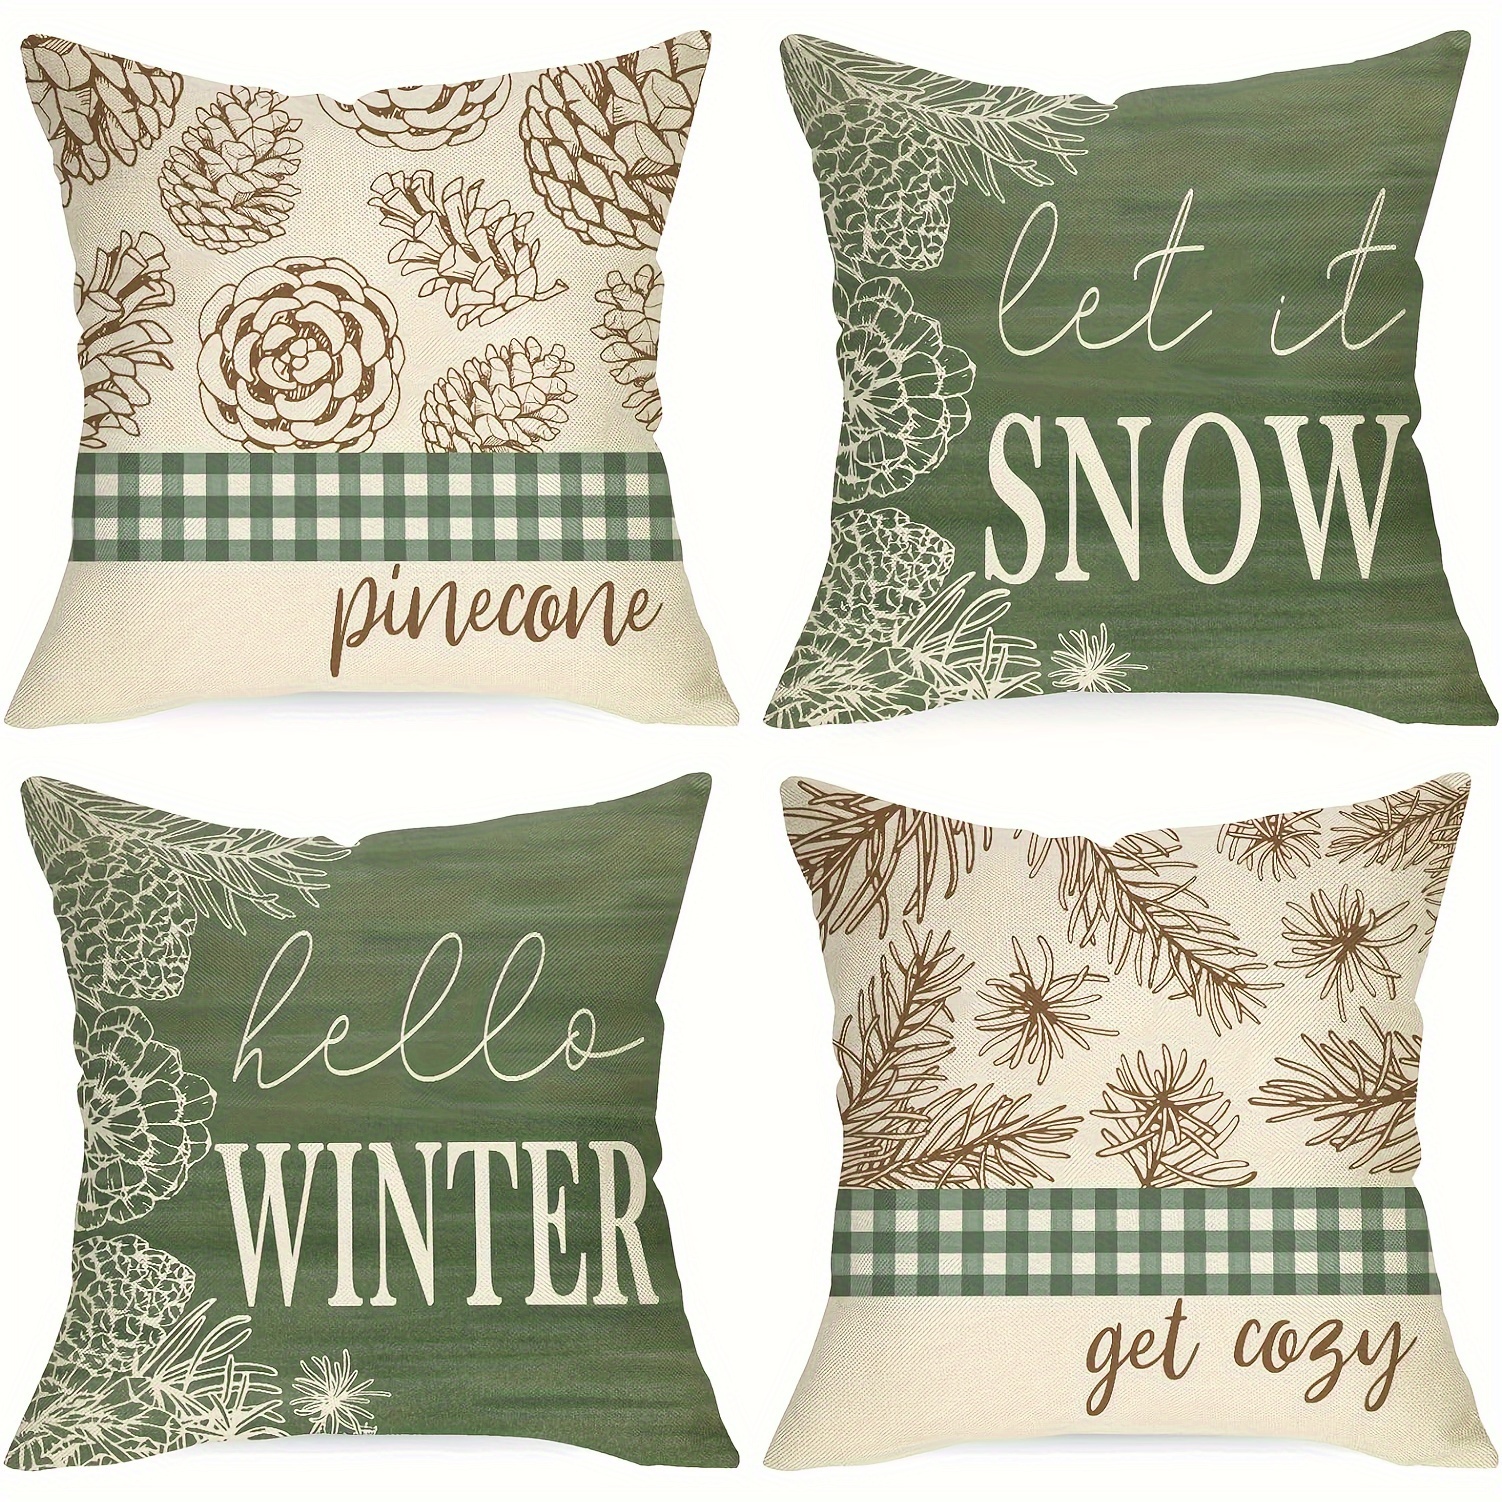 

4-piece Hello Winter Pine Cone Throw Pillow Covers 18x18" - Let It Snow & Green Buffalo Plaid Design, Linen Blend, Zip Closure - Perfect For Farmhouse Christmas Decor